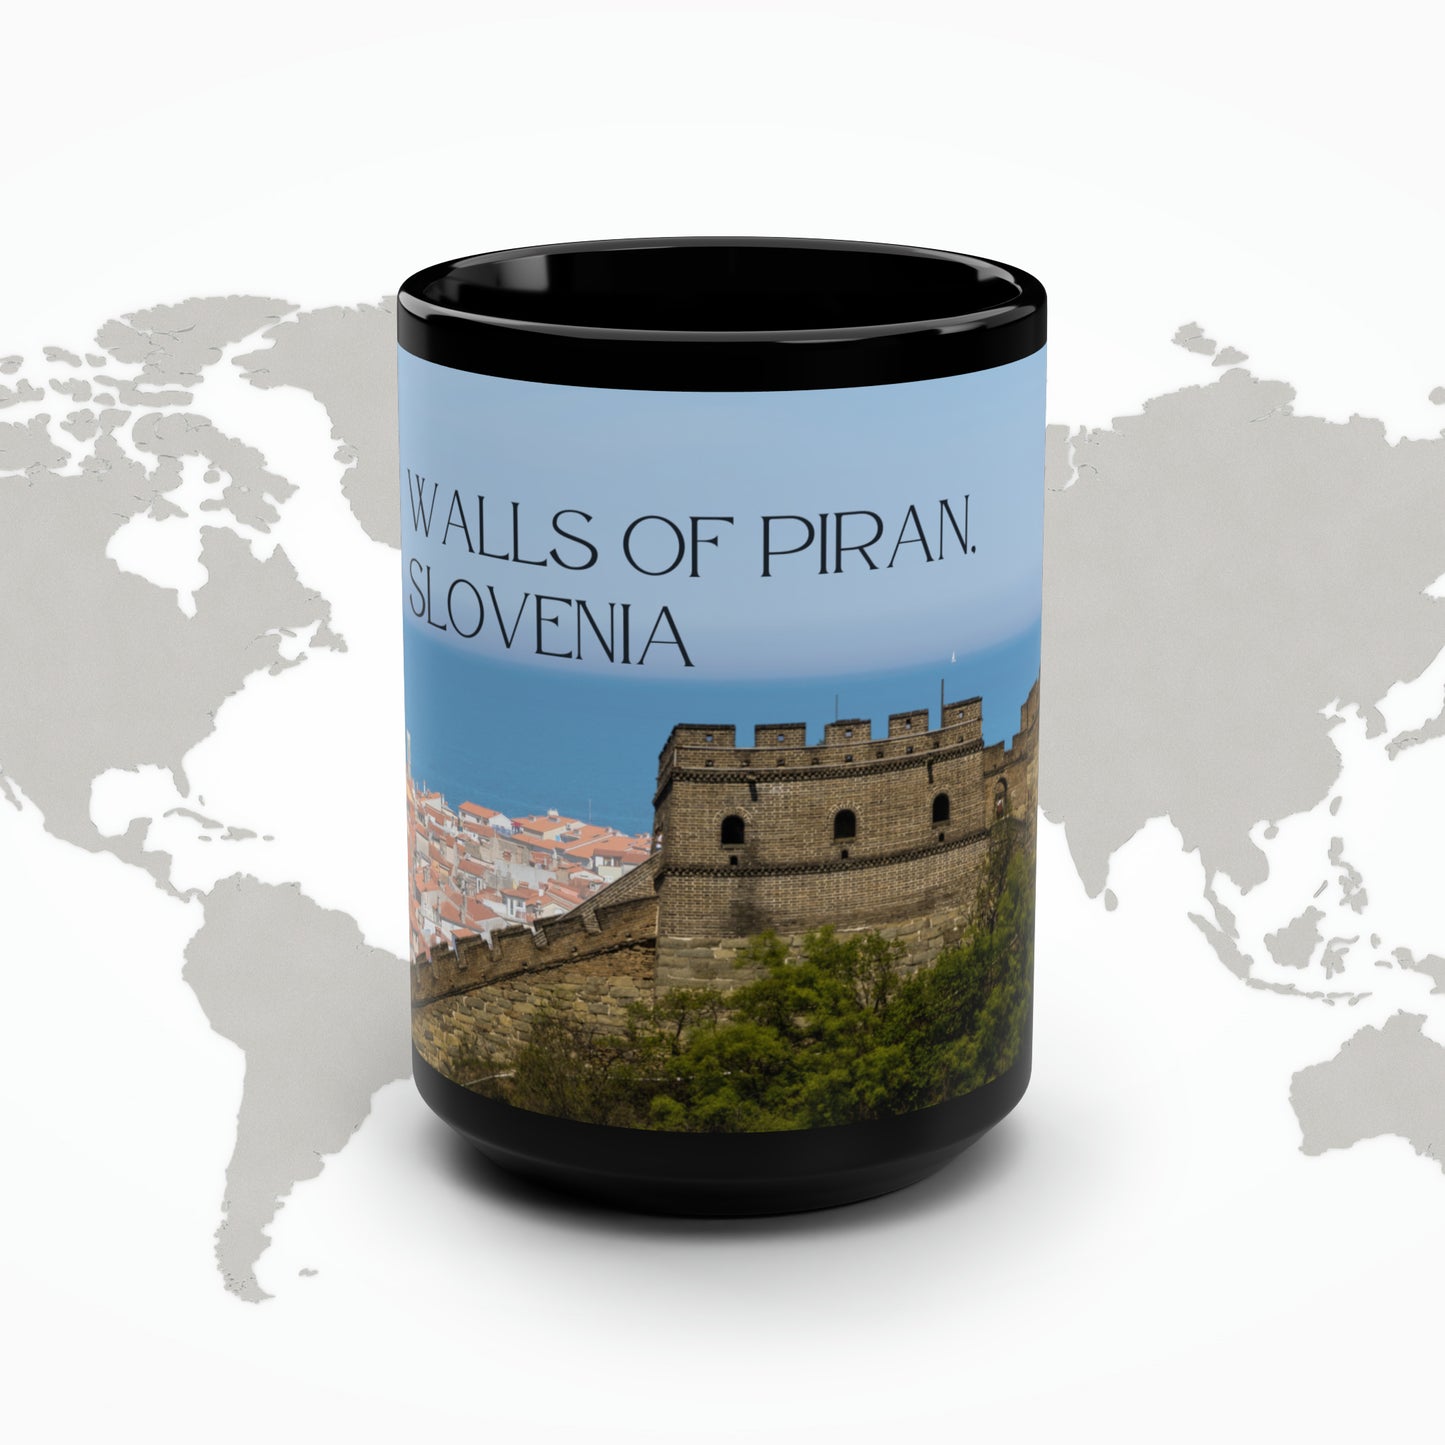 Piran, Slovenia Mug